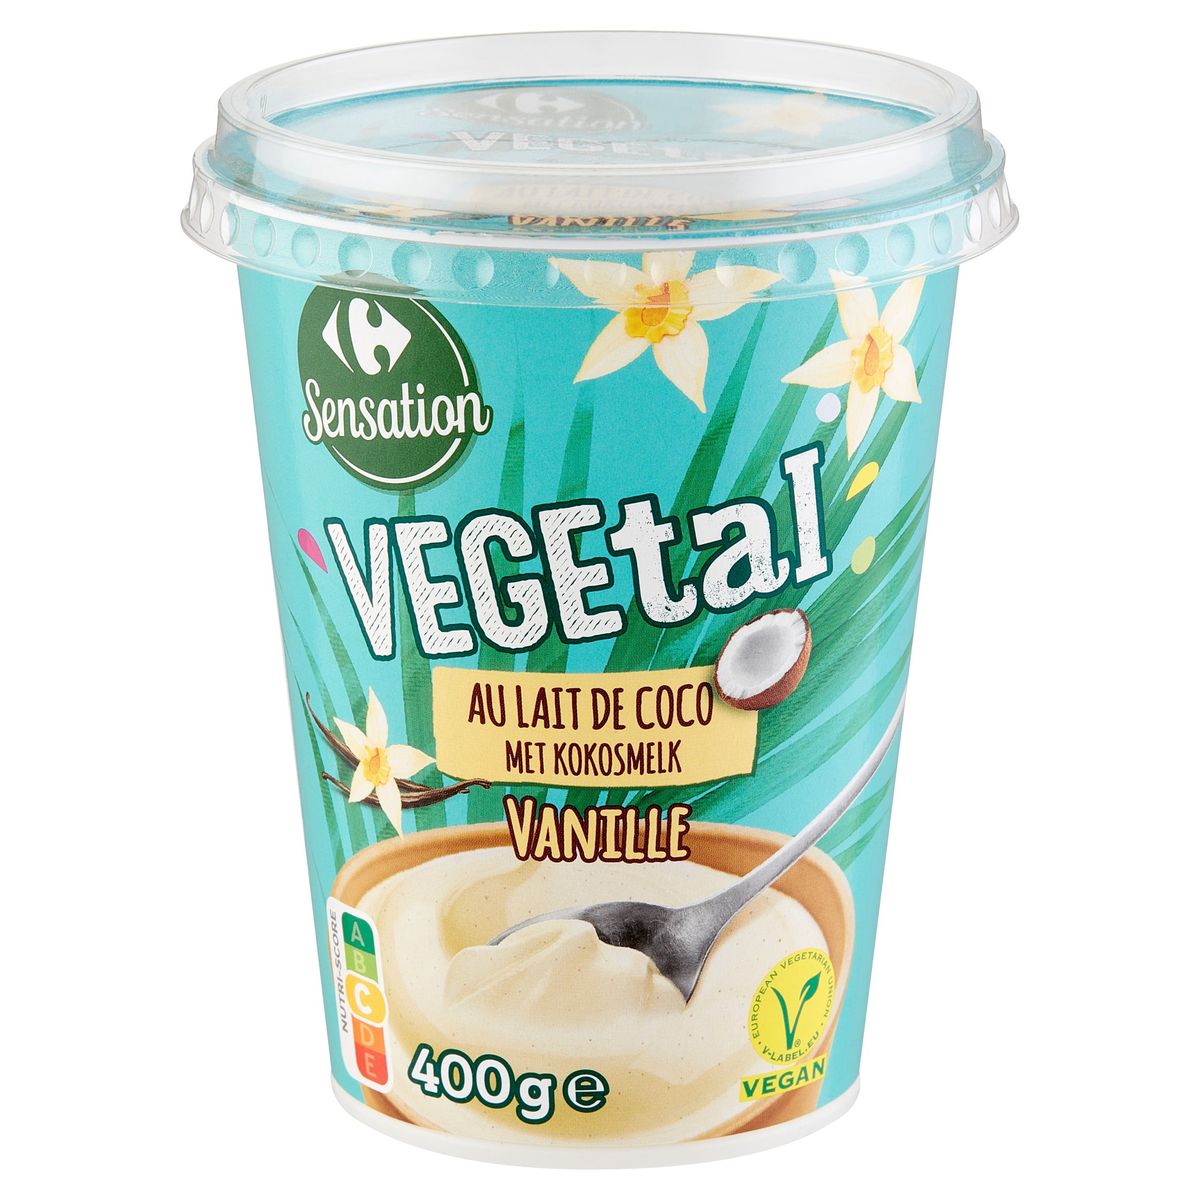 Carrefour Sensation Vegetal Vanille met Kokosmelk 400 g